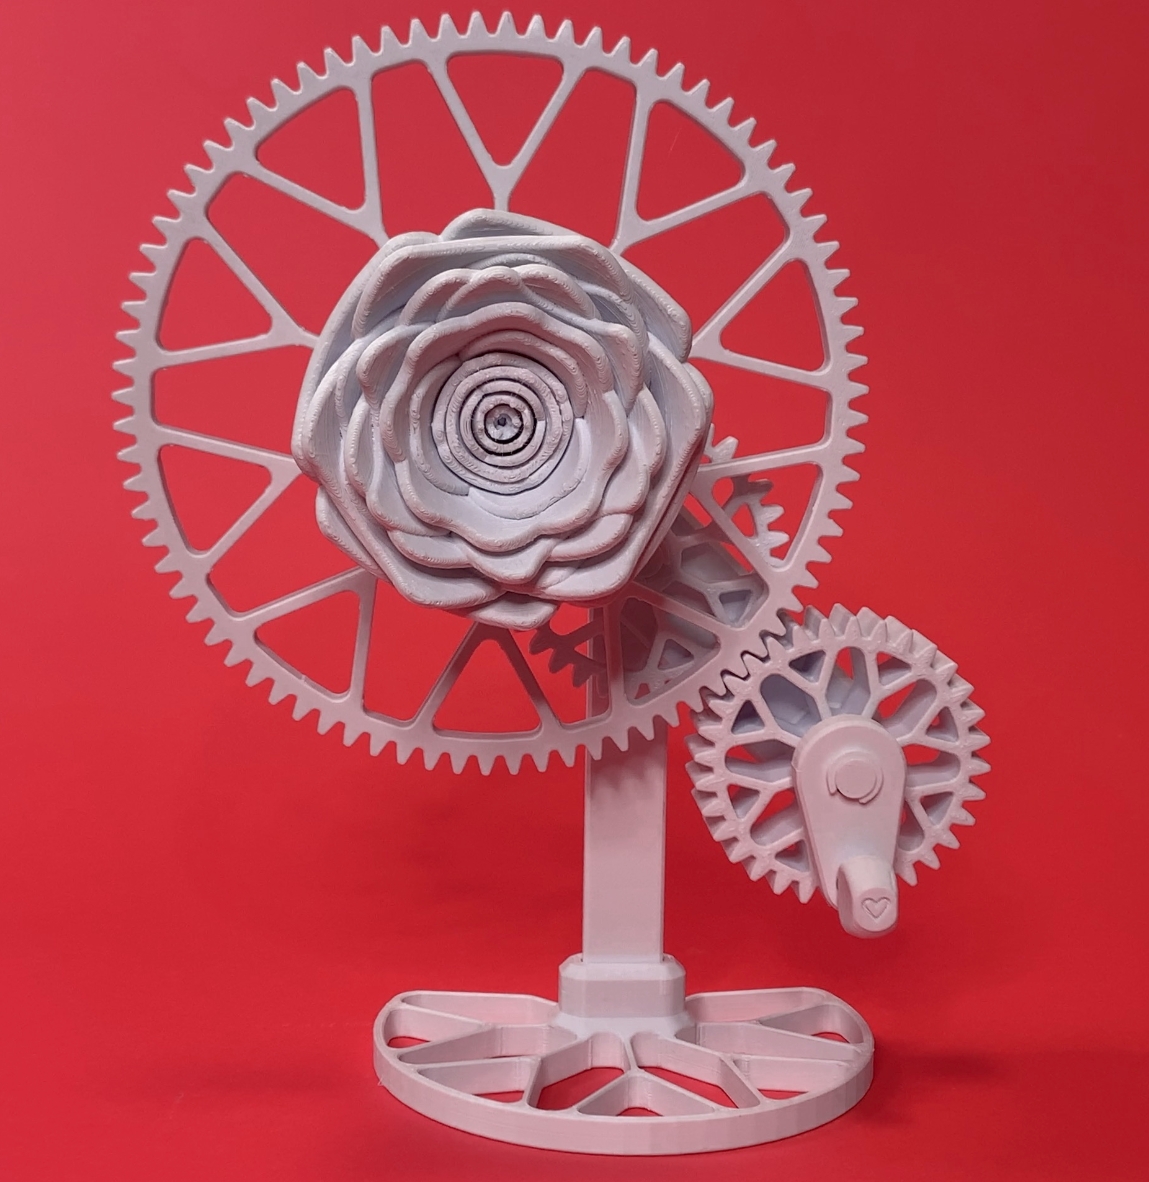 3D-printed Rose on Gear